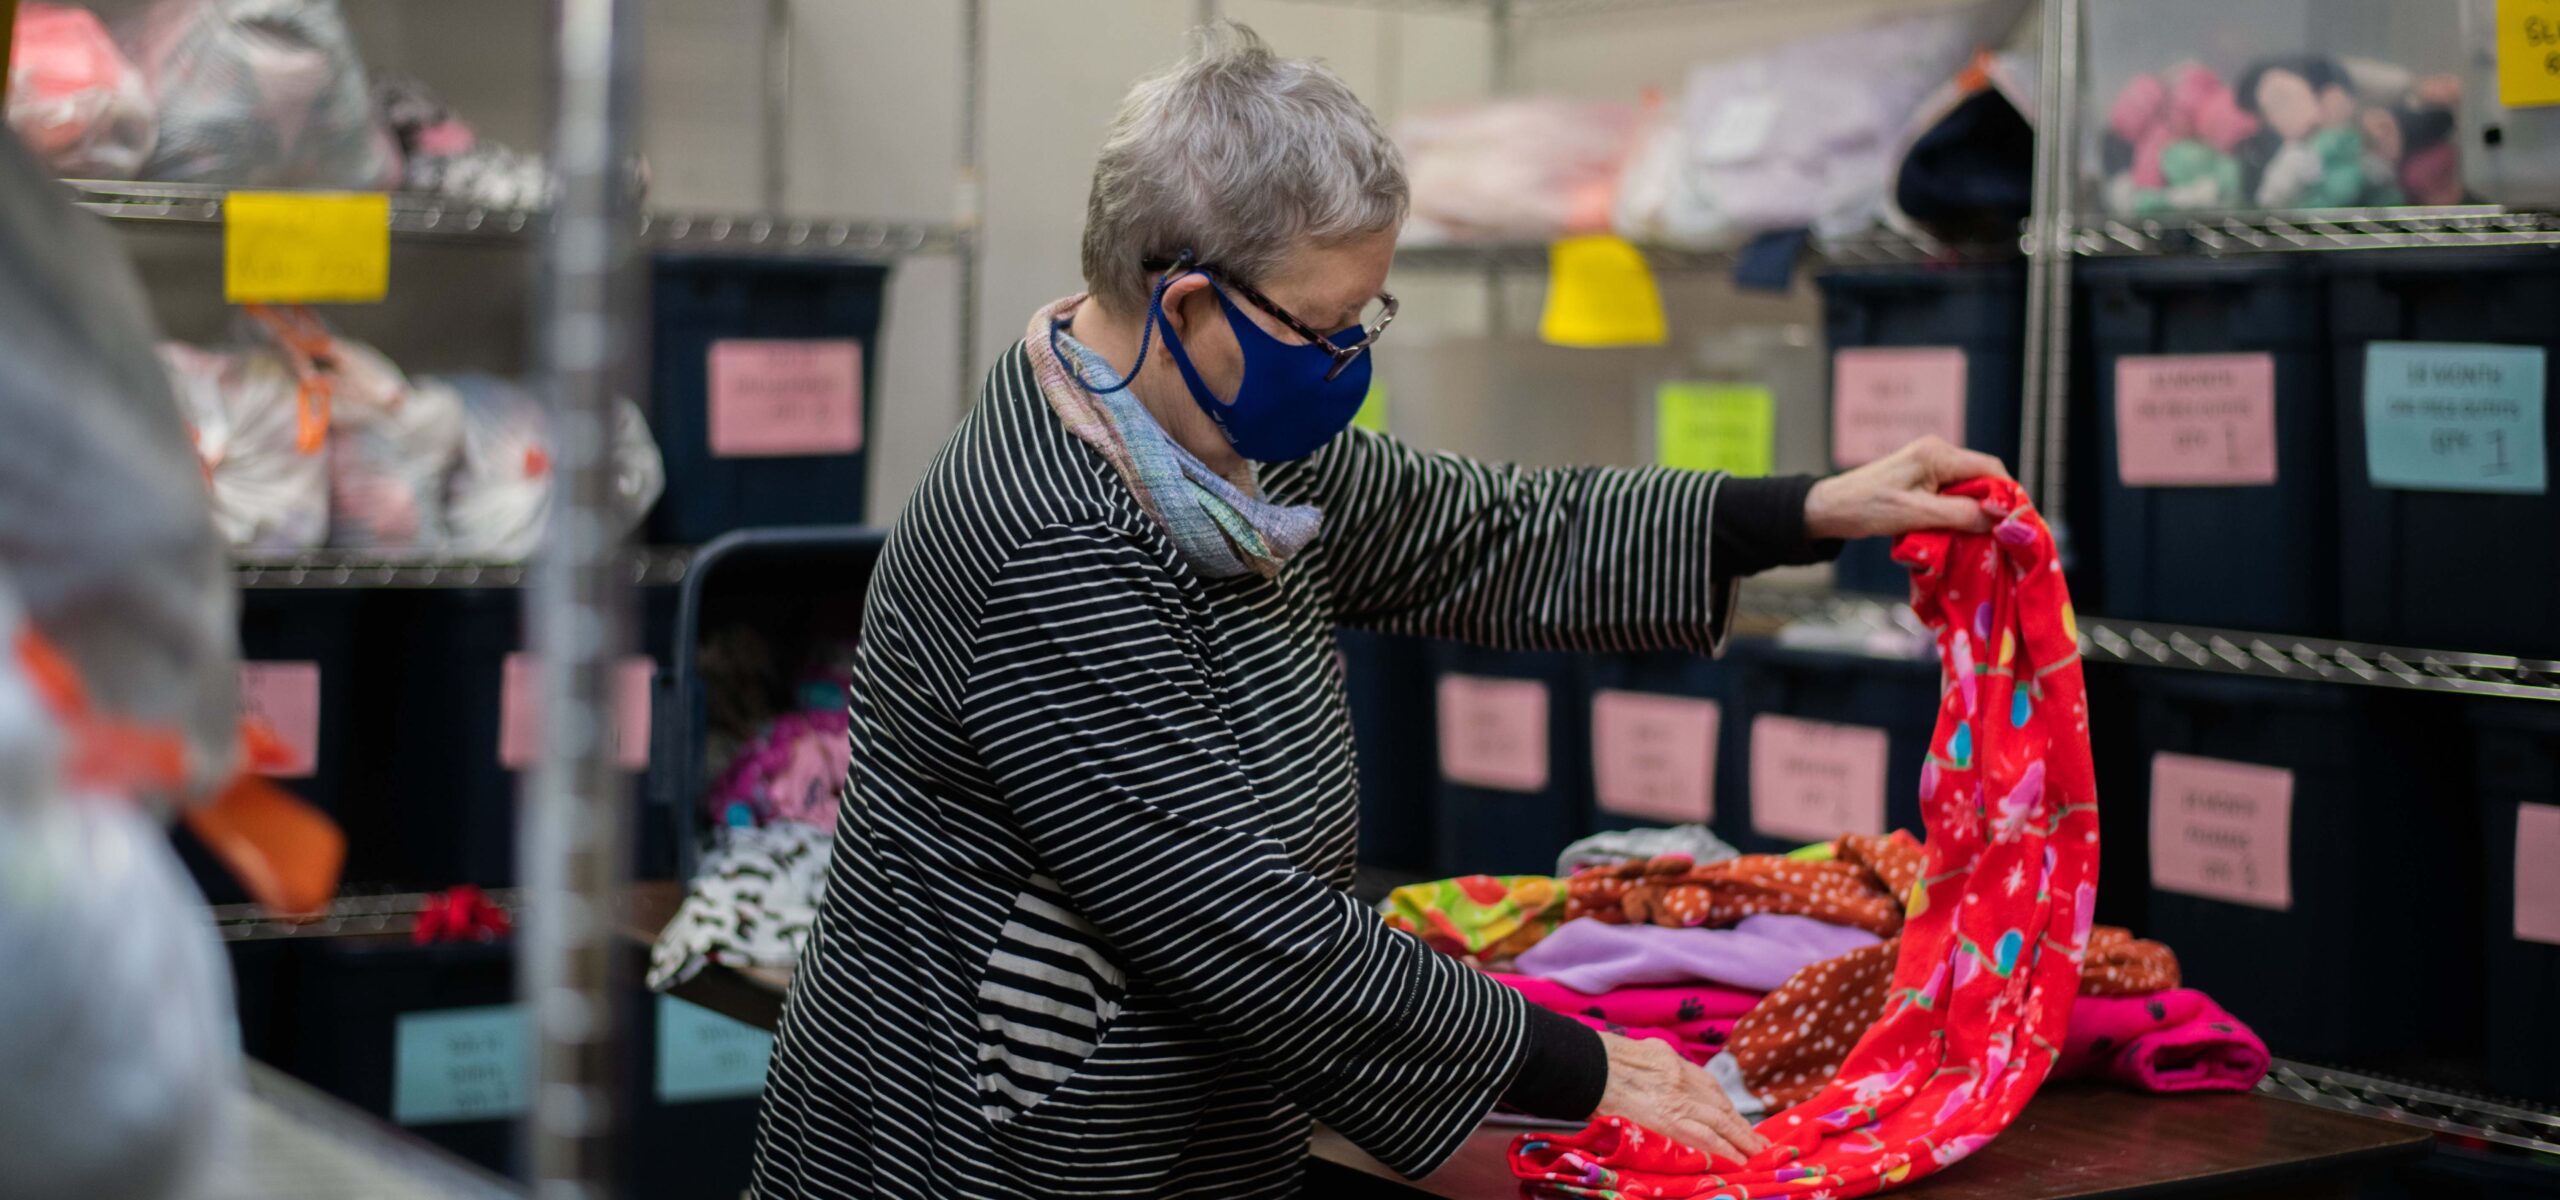 Elderly woman folding baby blankets in a storage facility.